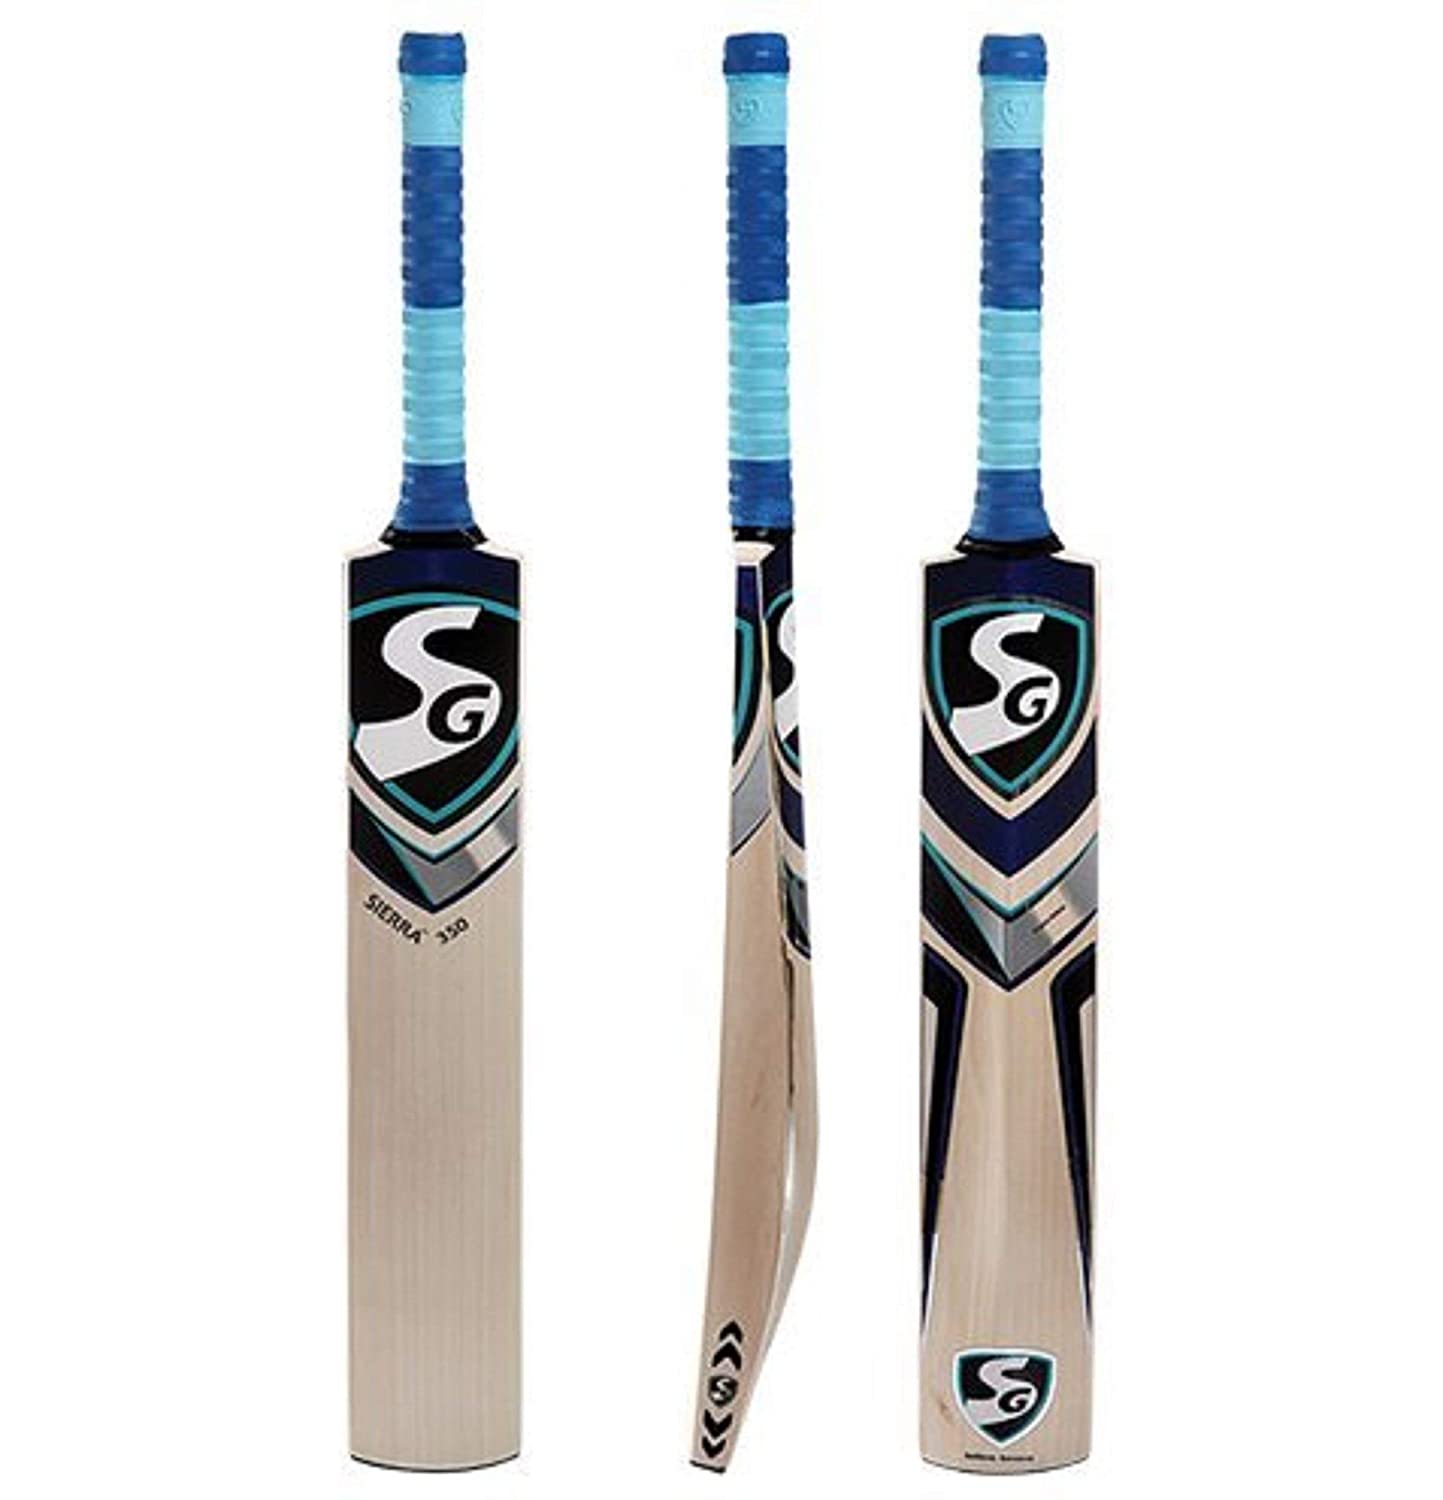 SG Cricket Bat Sierra 350